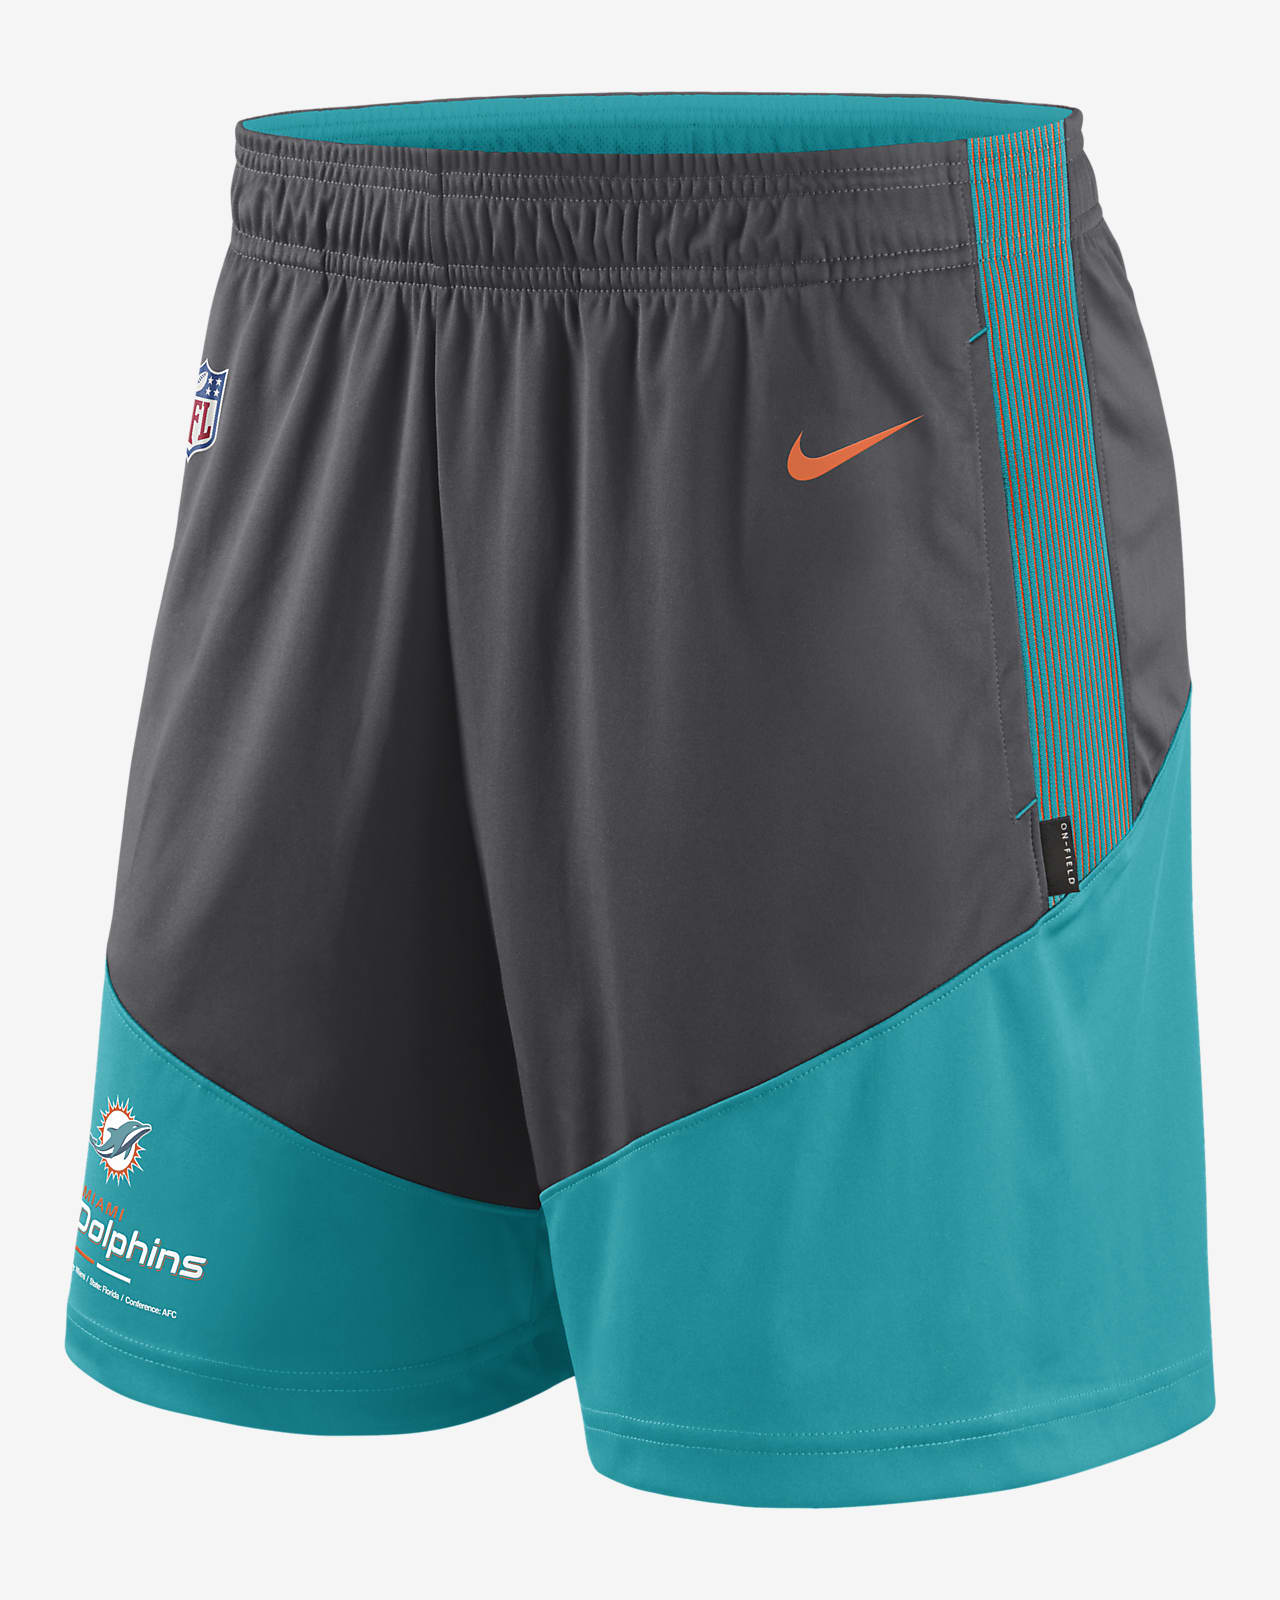 Nike Dri-FIT Primary Lockup (NFL Miami Dolphins) Men's Shorts